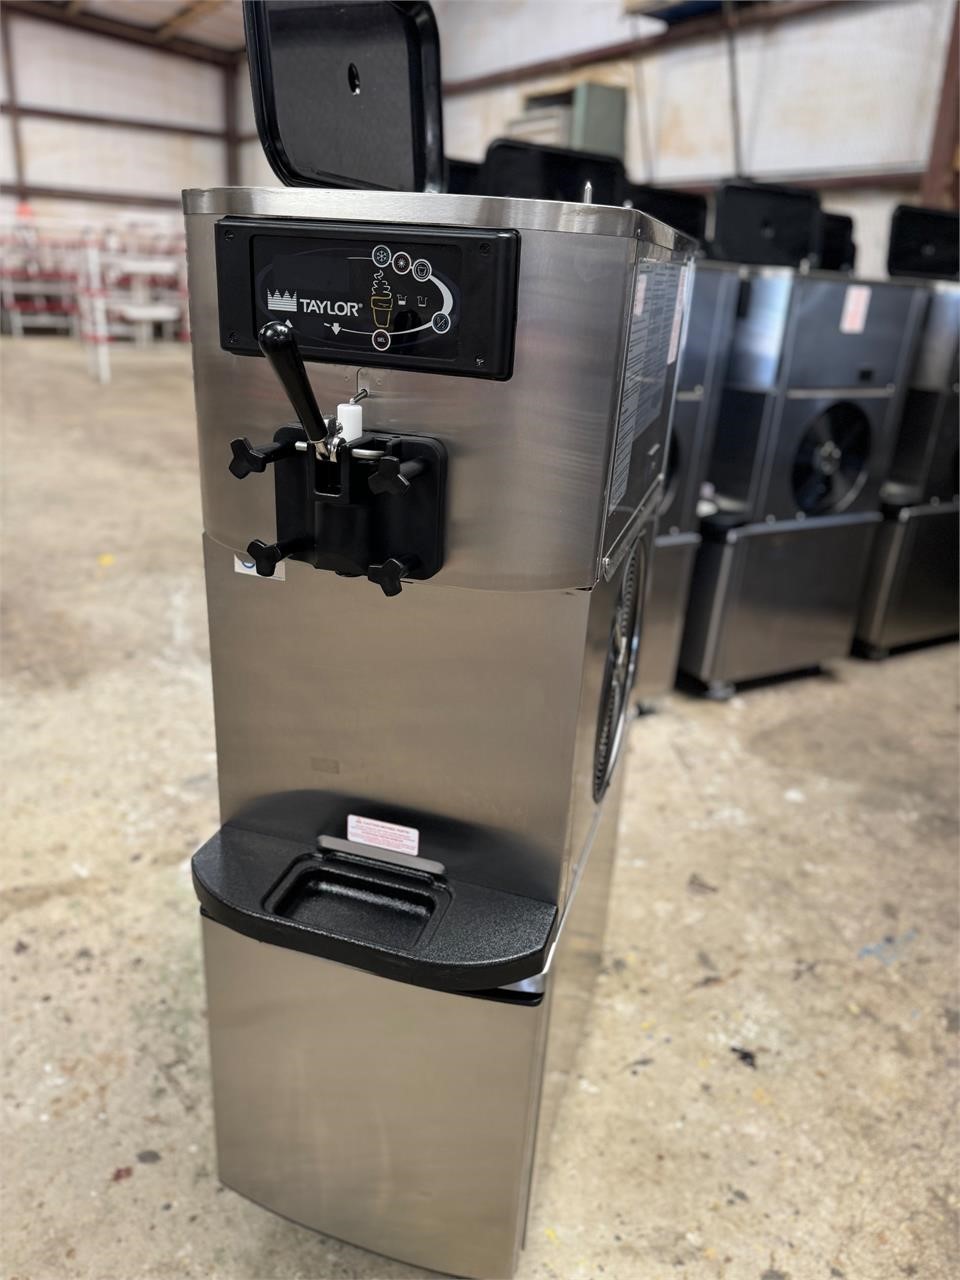 Taylor C709 Soft Serve Ice Cream Machine